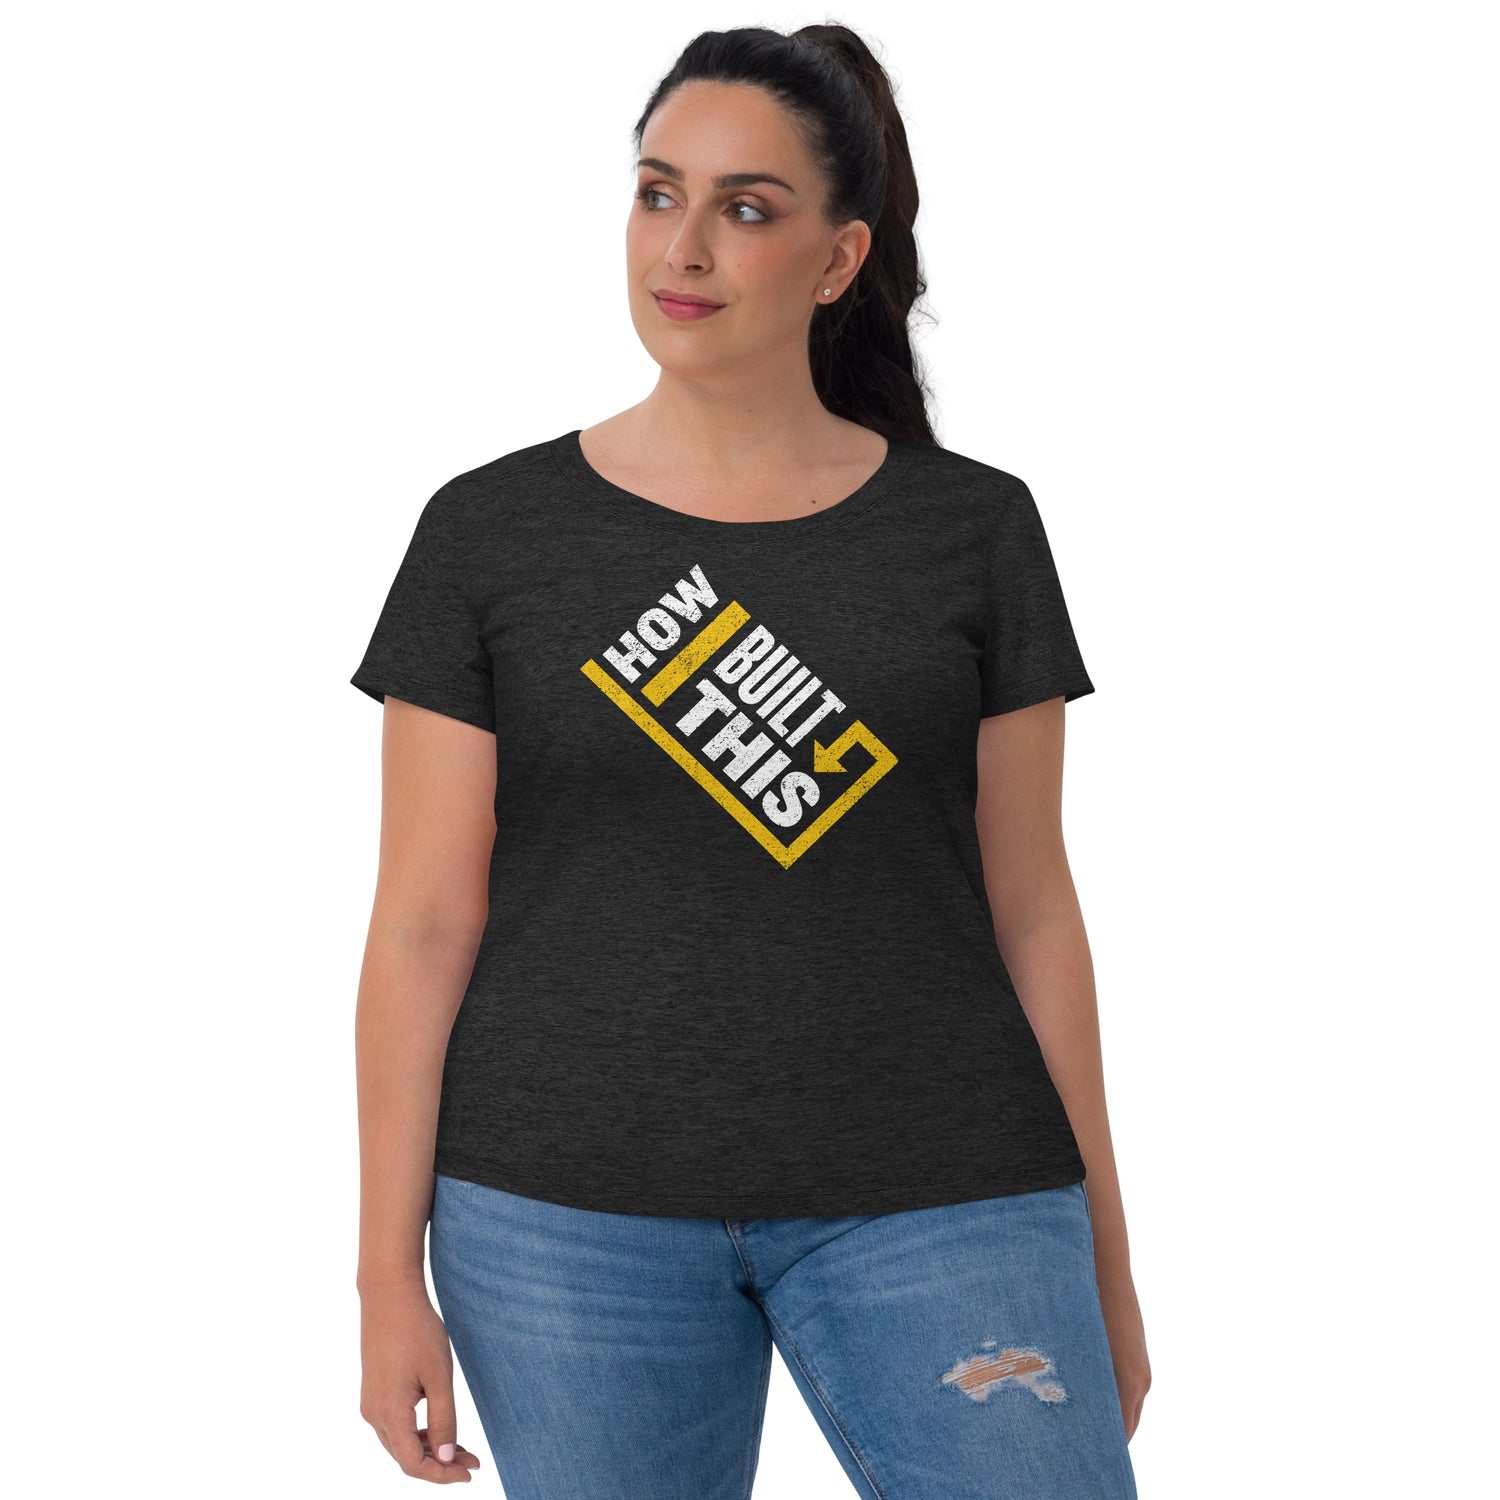 How I Built This Distressed Logo Women's Tri Blend T-Shirt